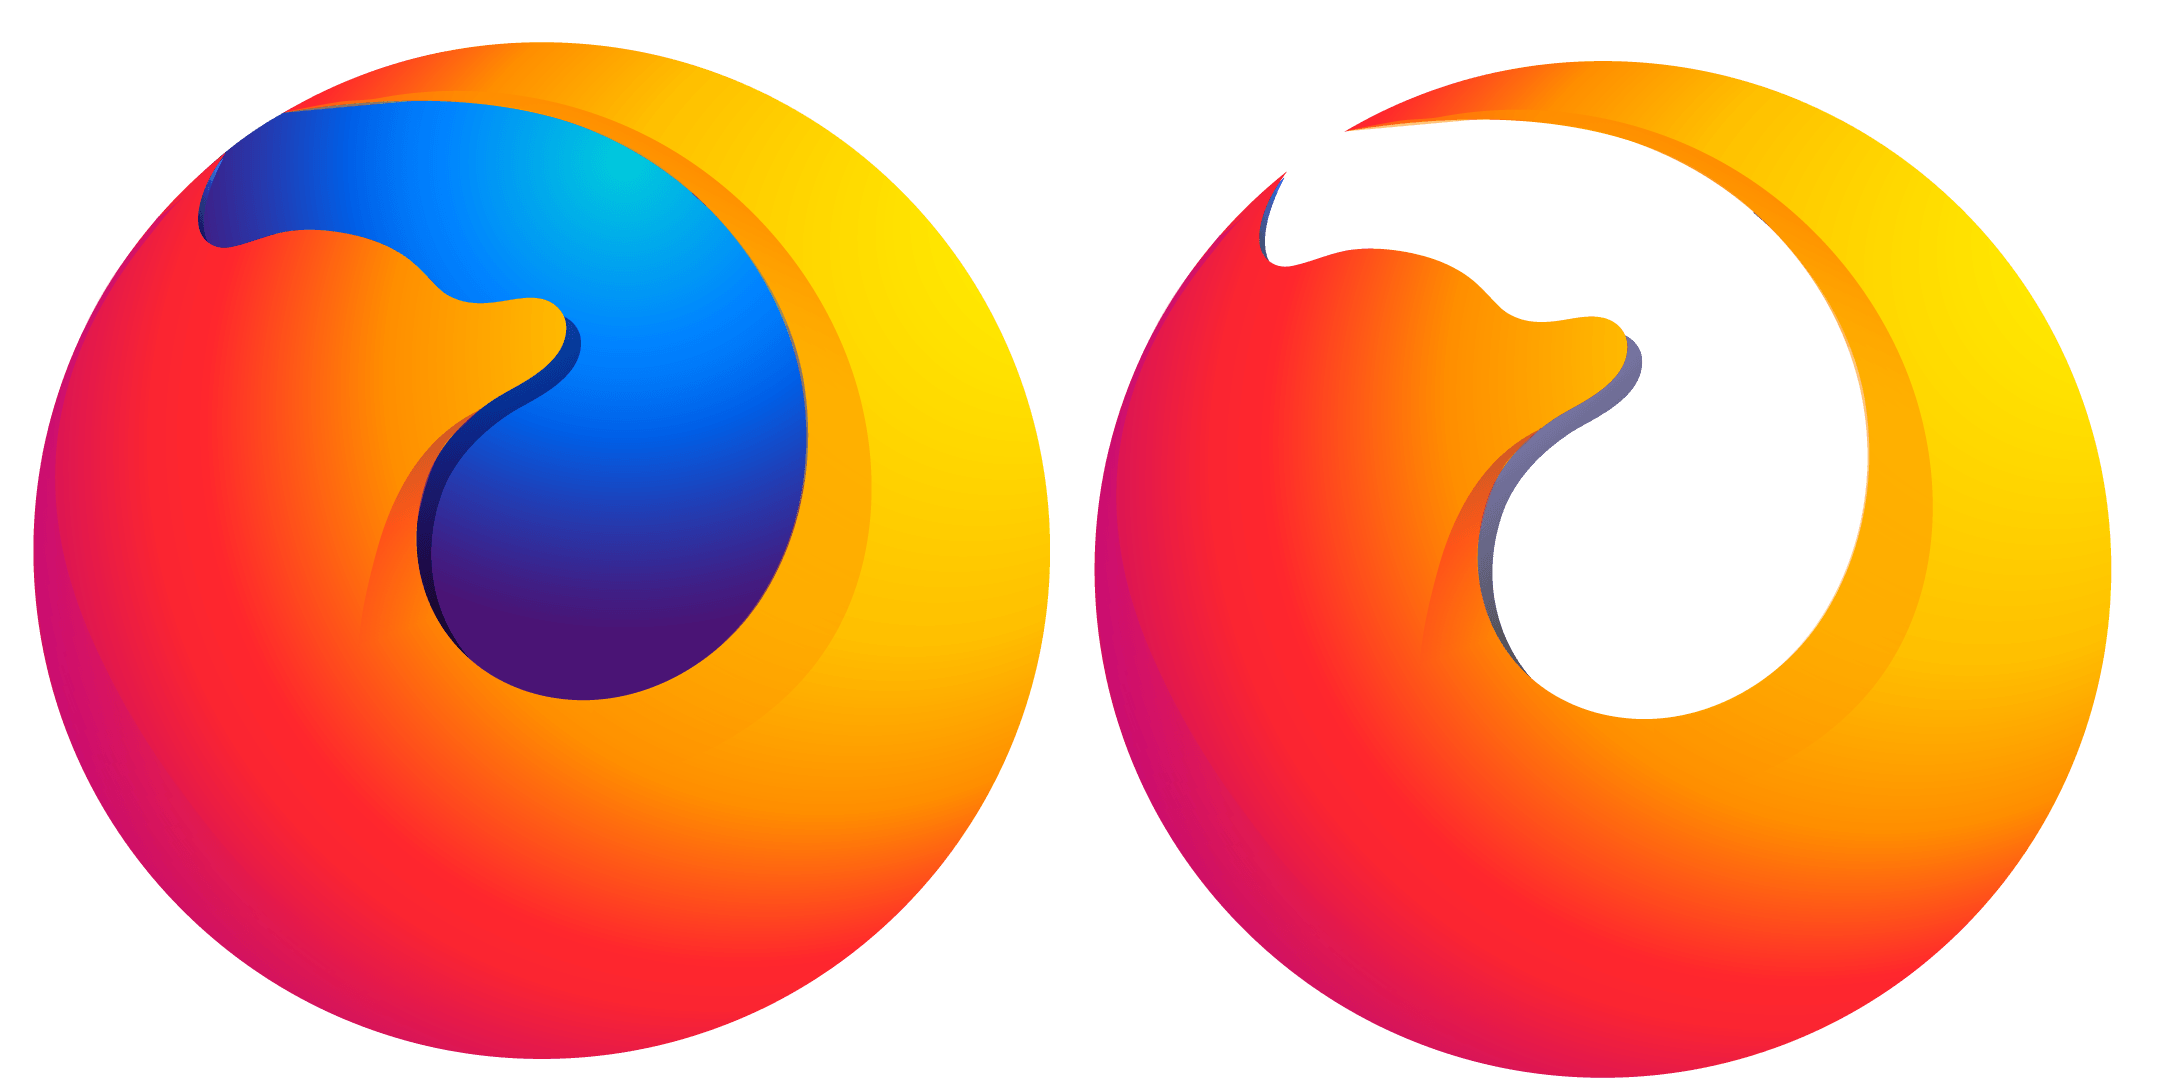 Firefox Logo - firefox logo ideas : graphic_design